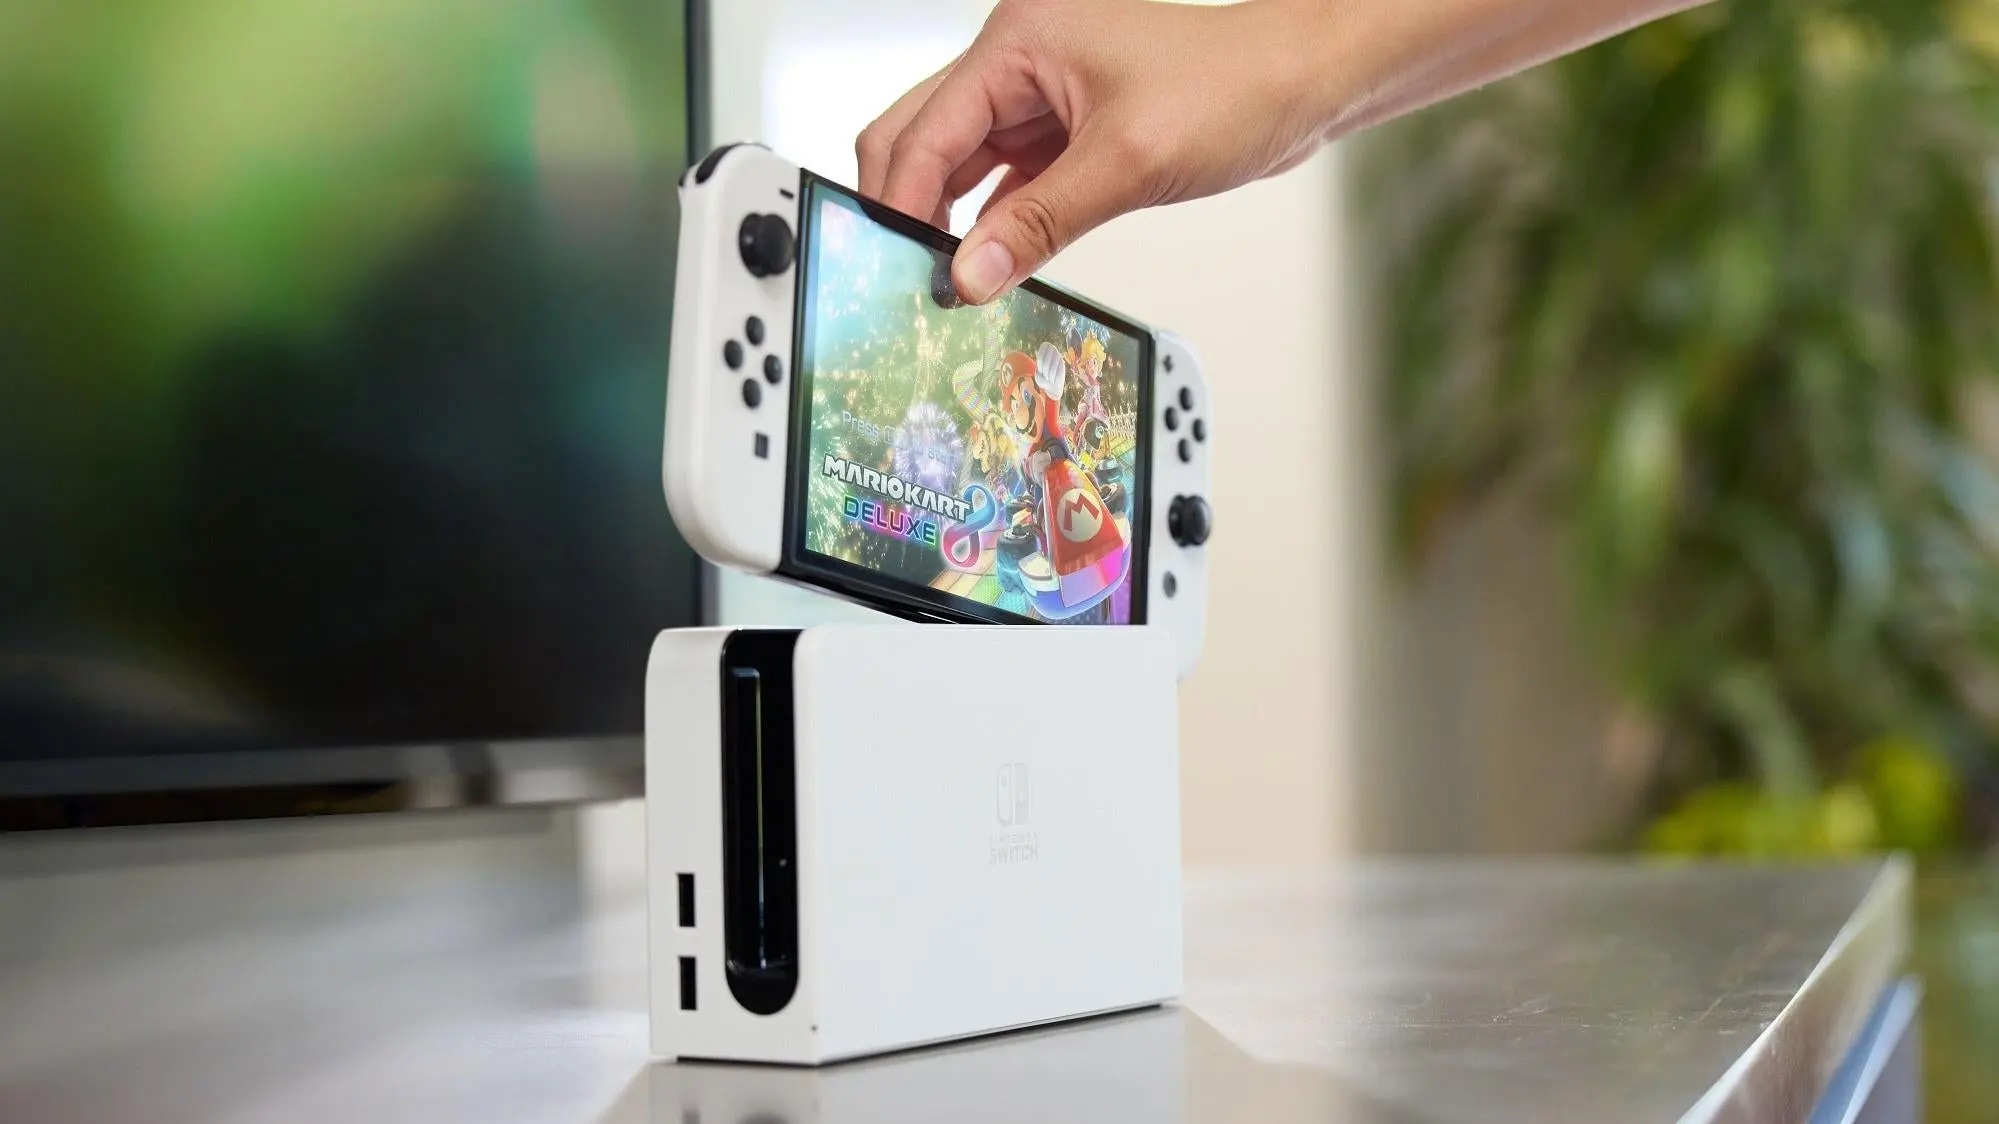 Nintendo Switch Surpasses Wii in America